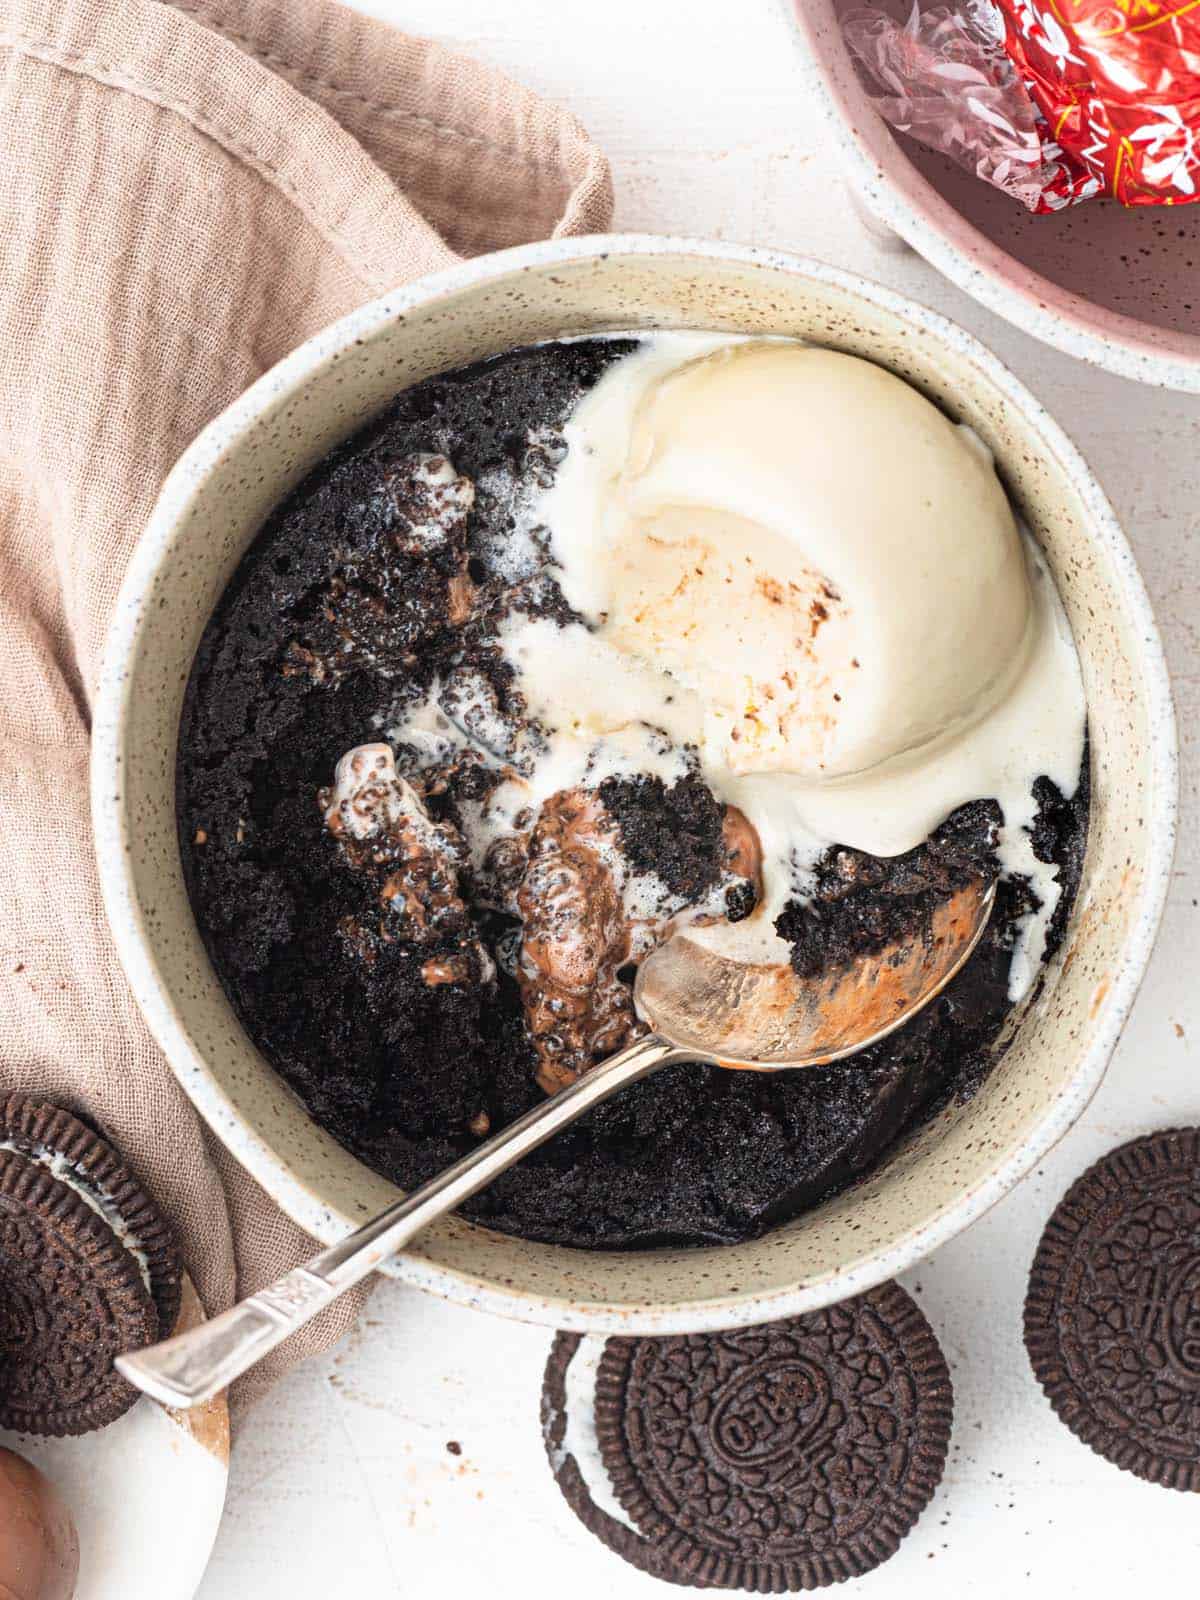 Microwave Oreo Lava Mug Cake with Ice cream an a molten chocolate center